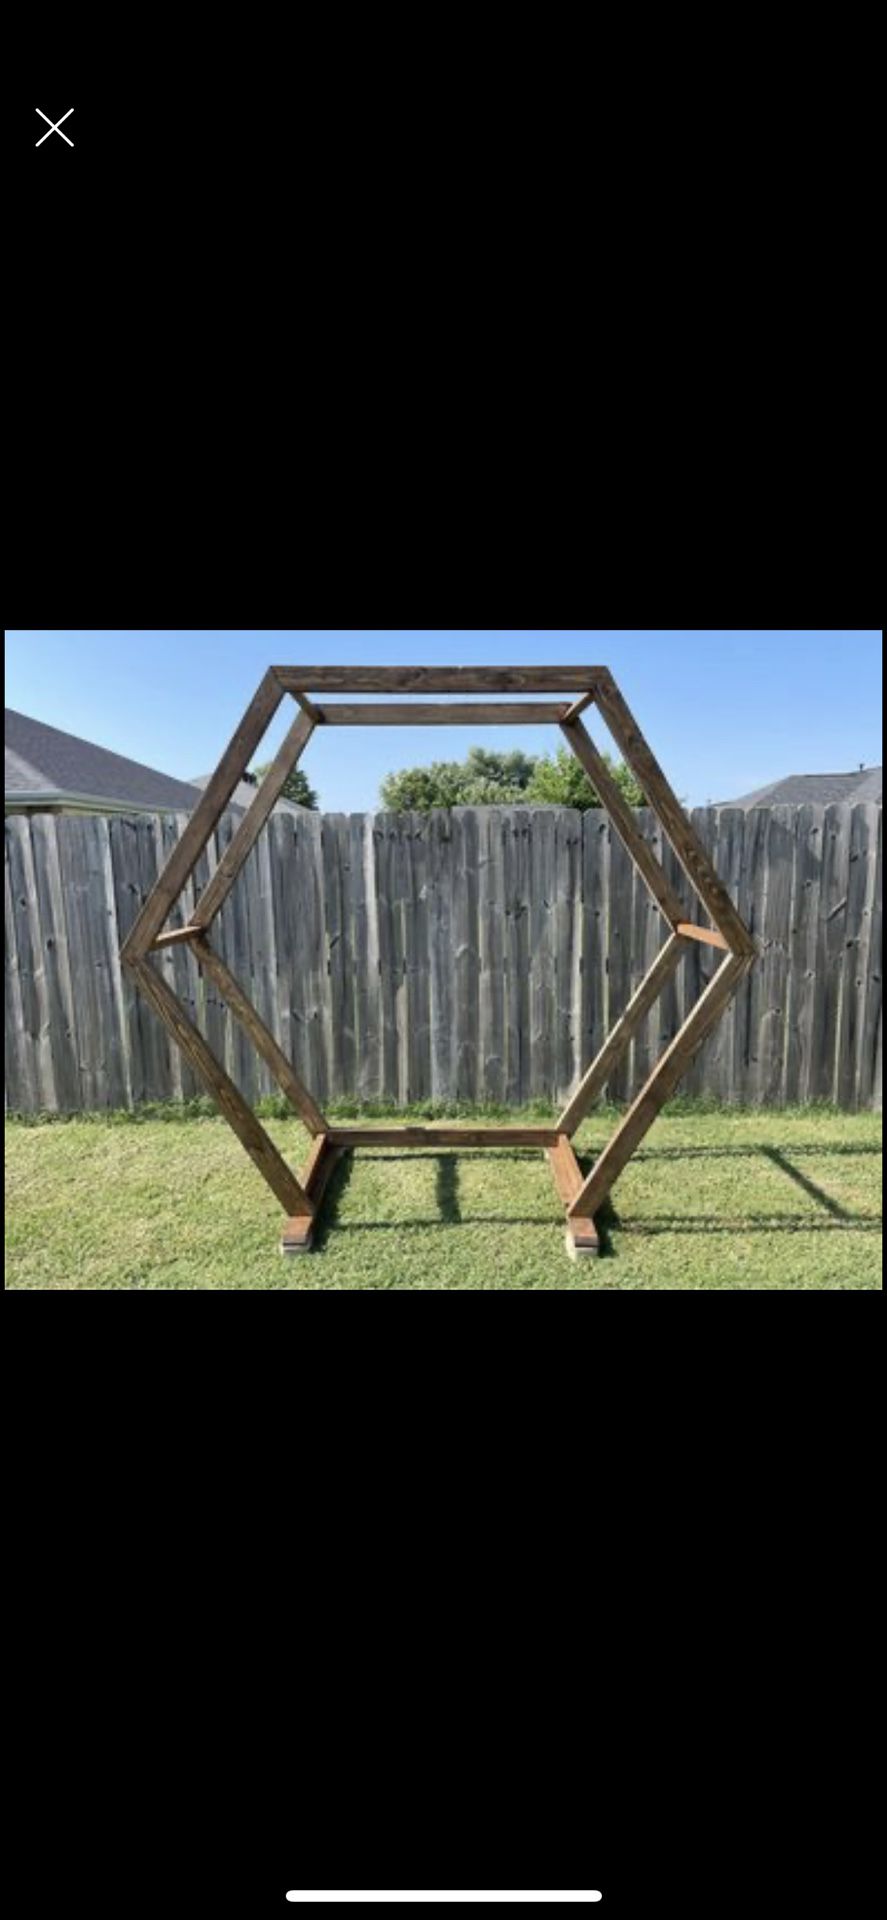 Wedding Arches - 6’10 ft Wooden Hexagon Arch - Custom Made in Bentonville, AR (Please Read Description)